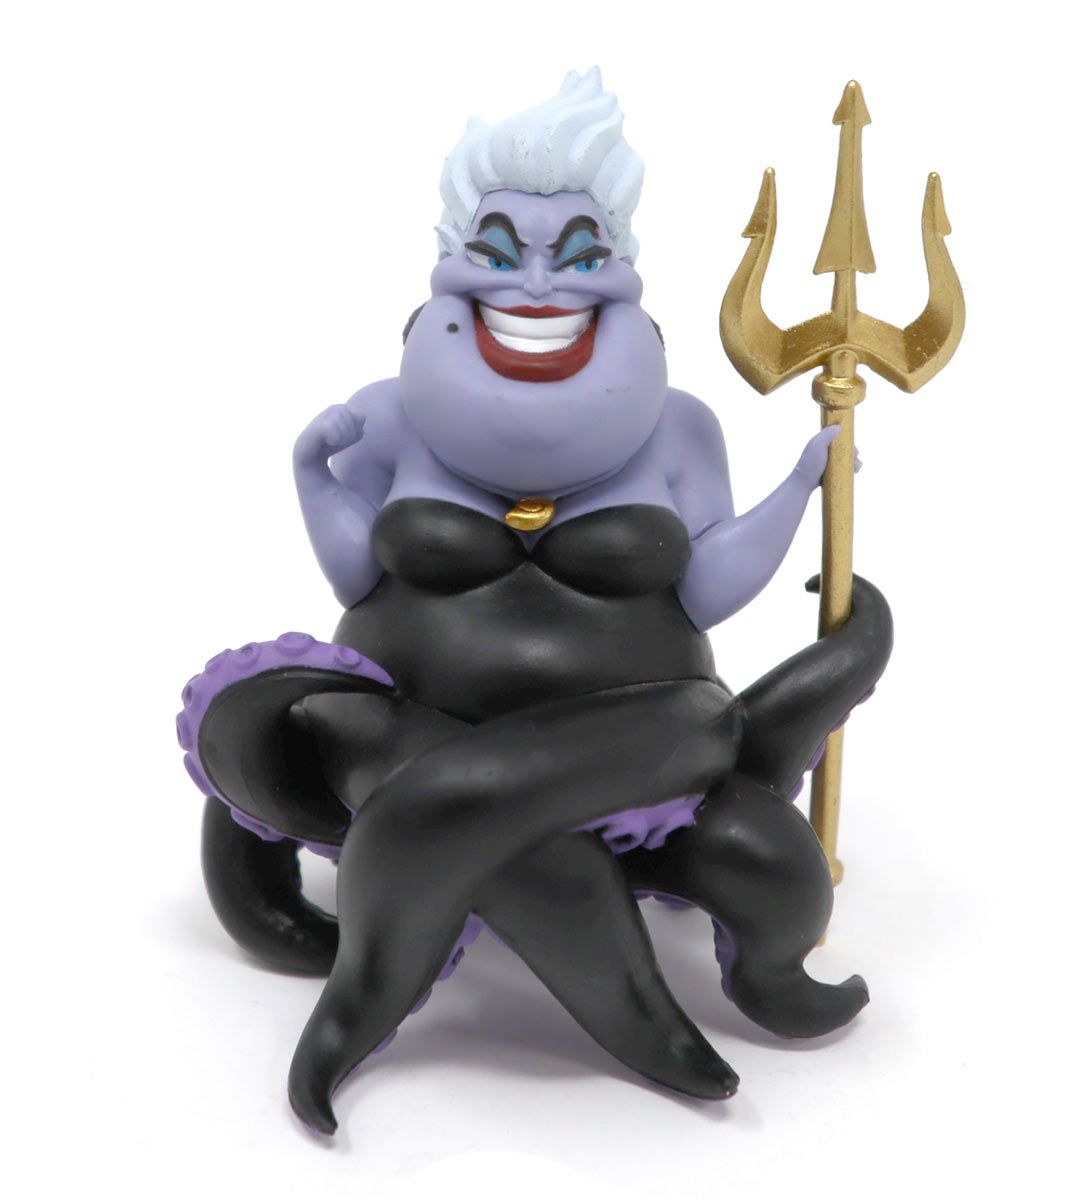 Serie de ataque de mini huevo - Ursula (villanos de Disney)